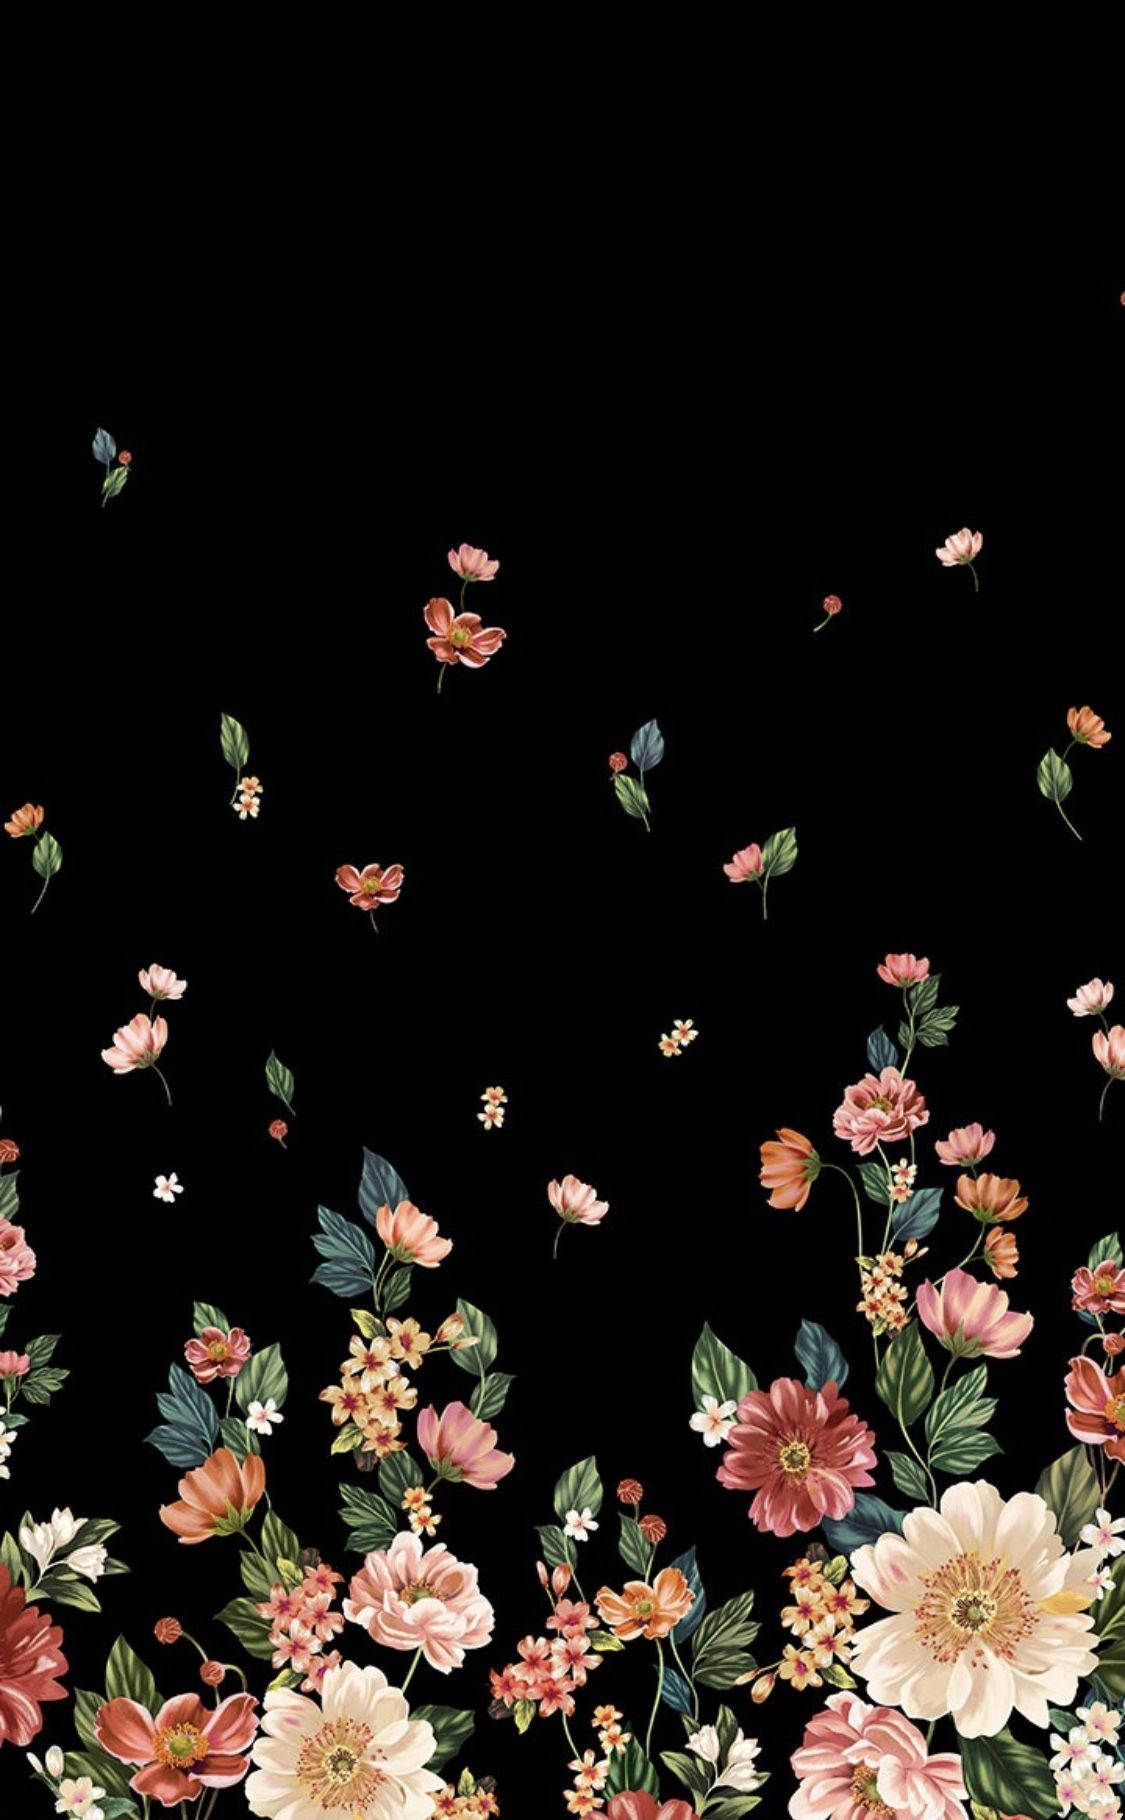 Falling Floral On Dark Background